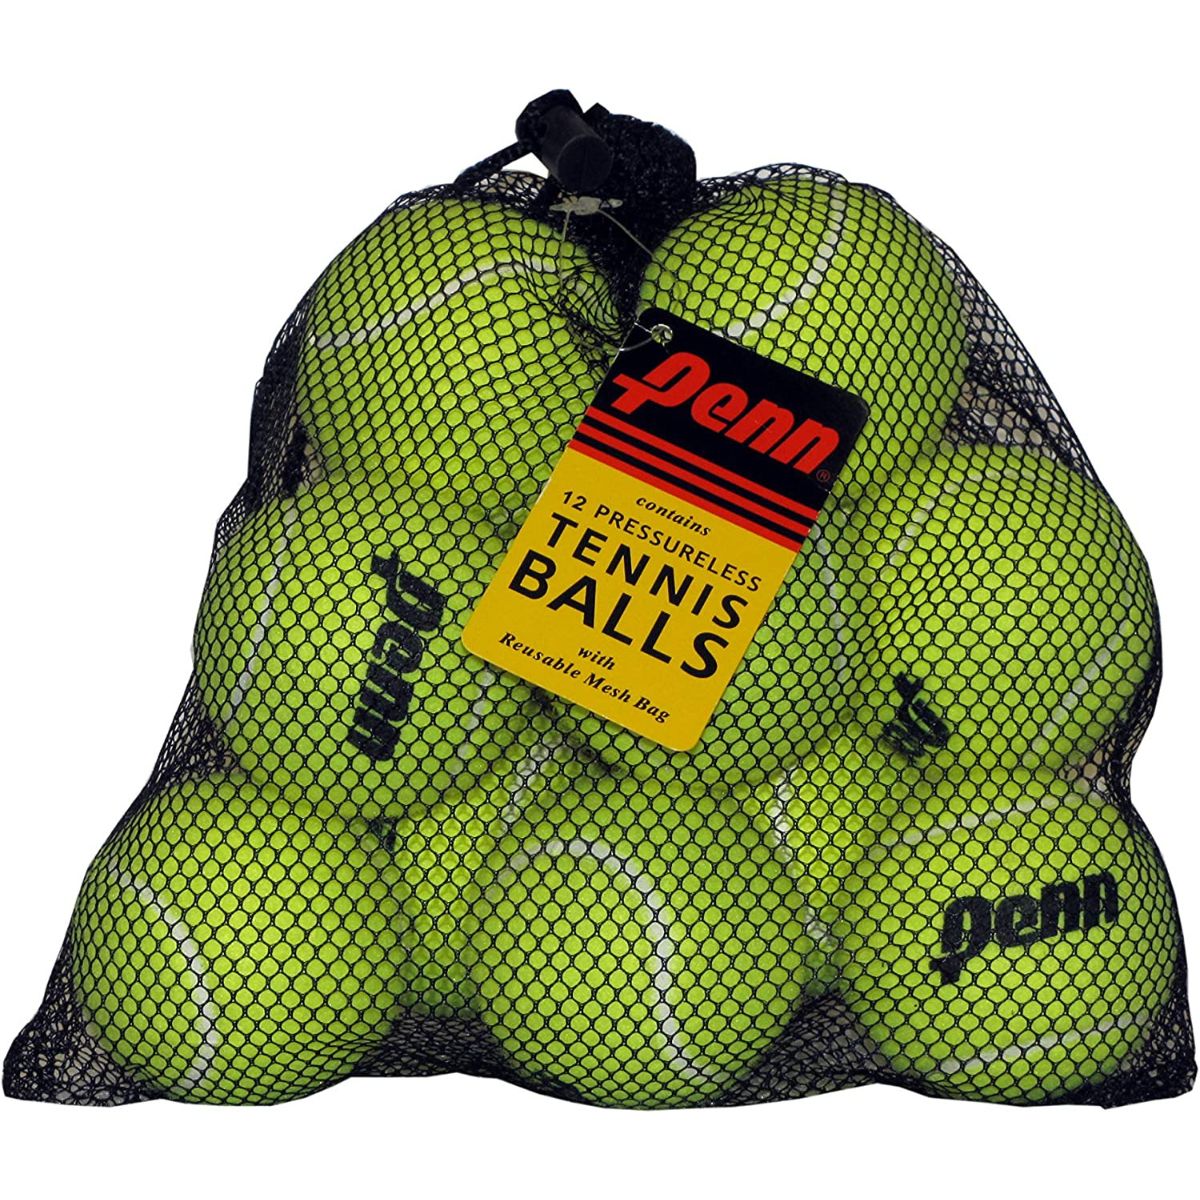 The Best Tennis Balls for Practice Options: Penn Pressureless Tennis Balls